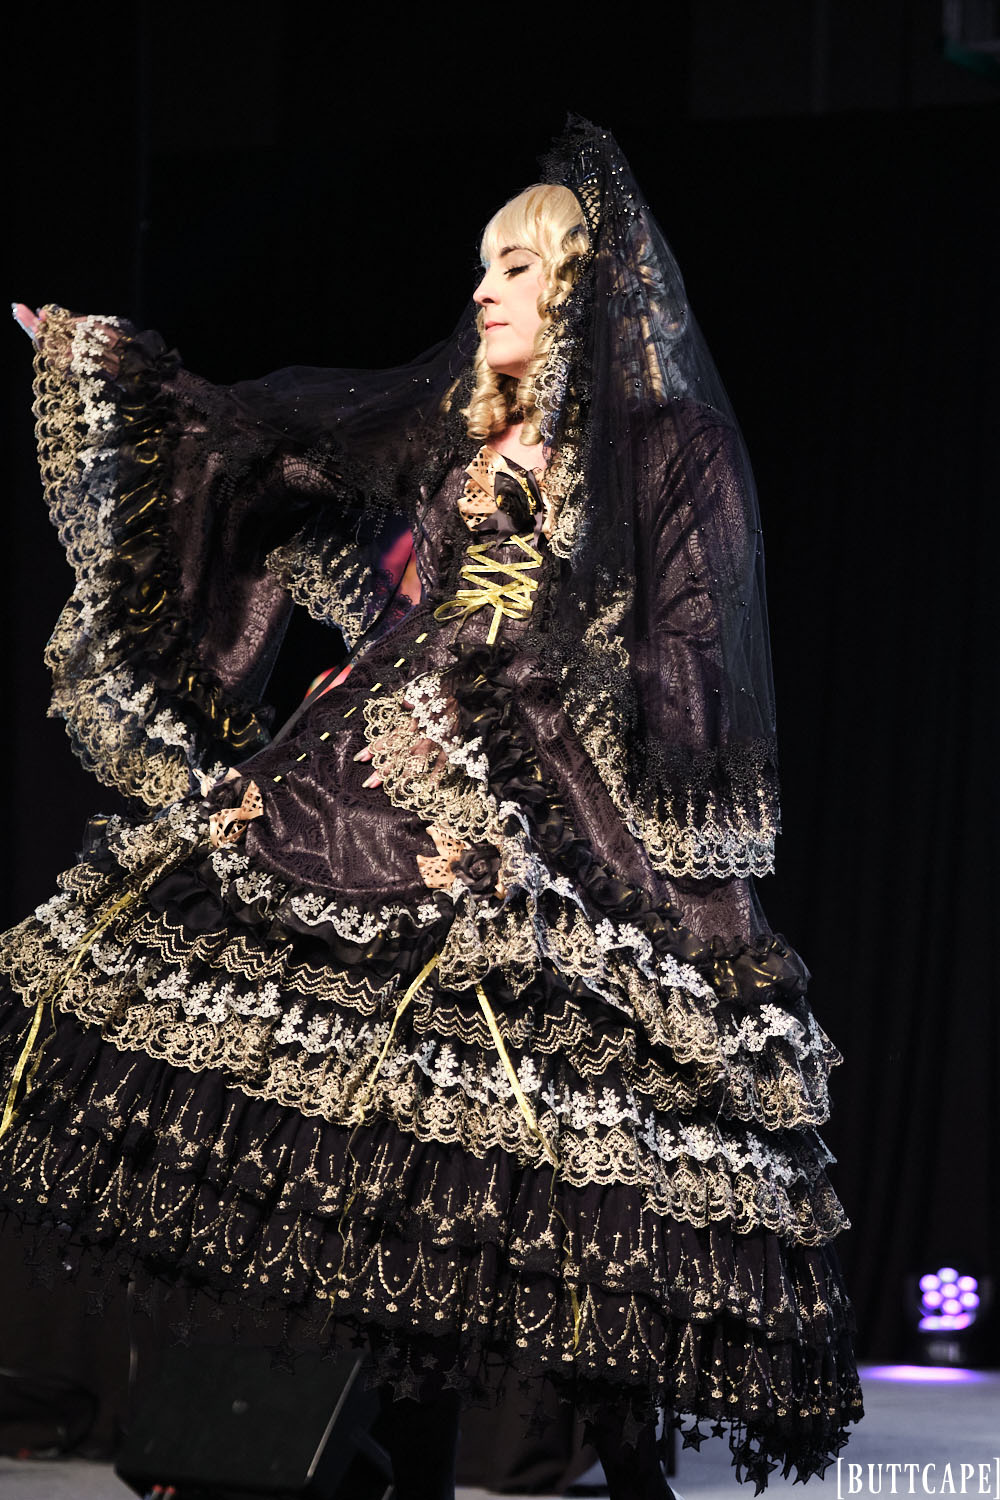 black and gold gothic lolita model posing dramatically.